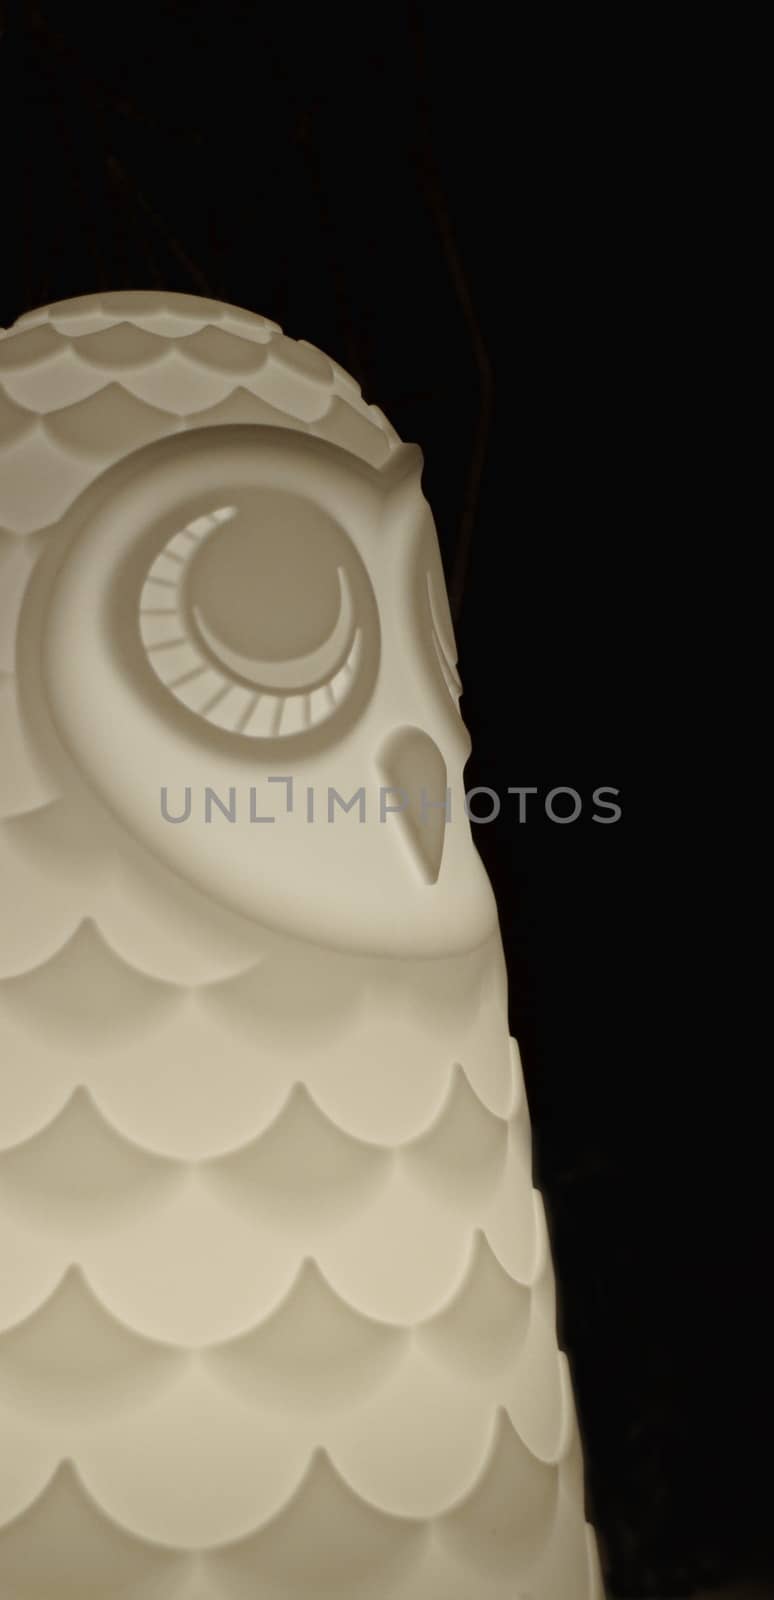 Night White Owl, Night White Owl Lamp Lamp black background, symbol of wisdom